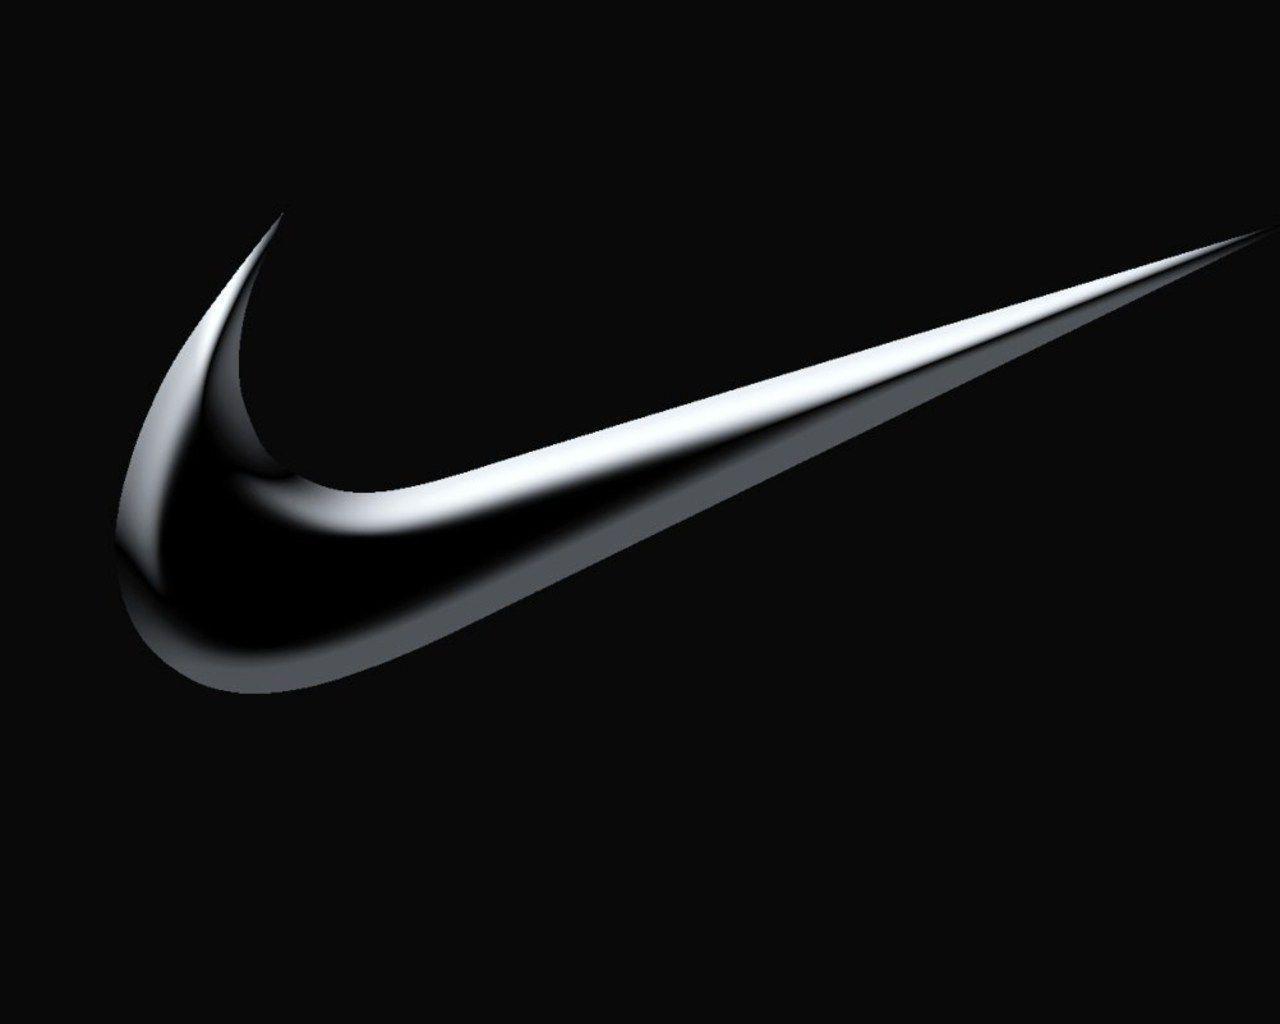 Cool Nike Logos 14 102977 Image HD Wallpaper. Wallfoy.com